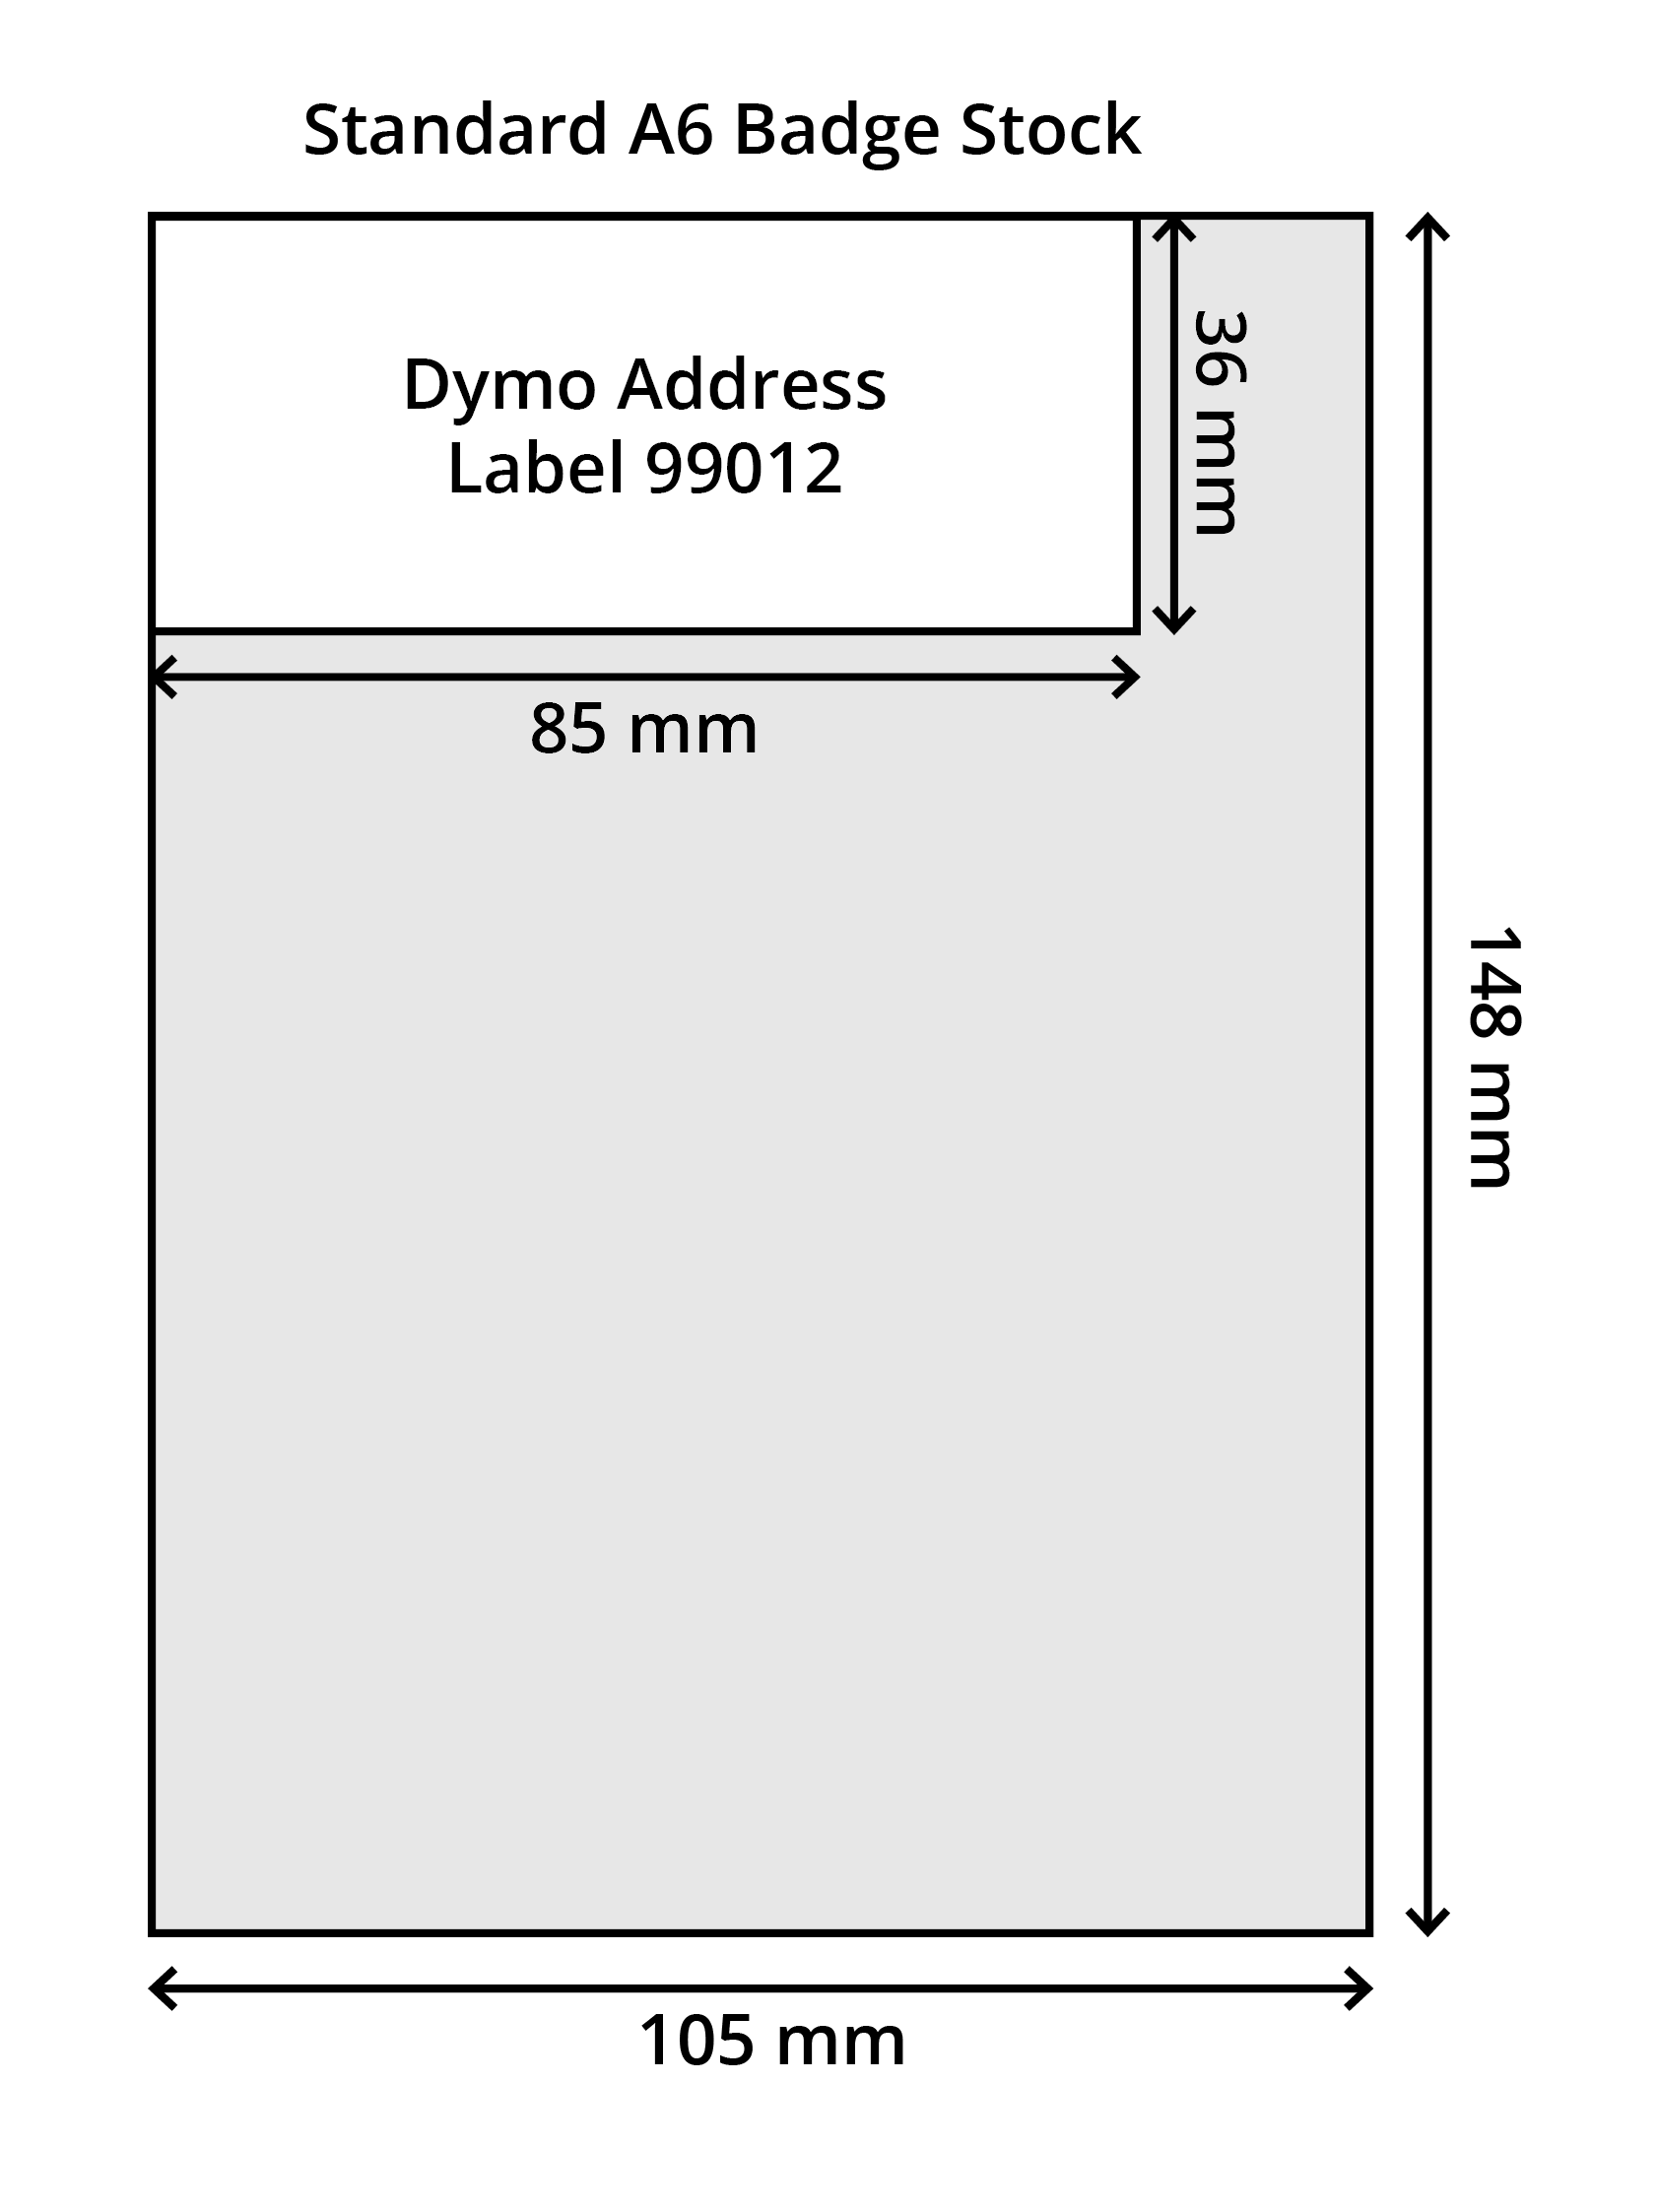 Dymo-vs-A6-badge.png